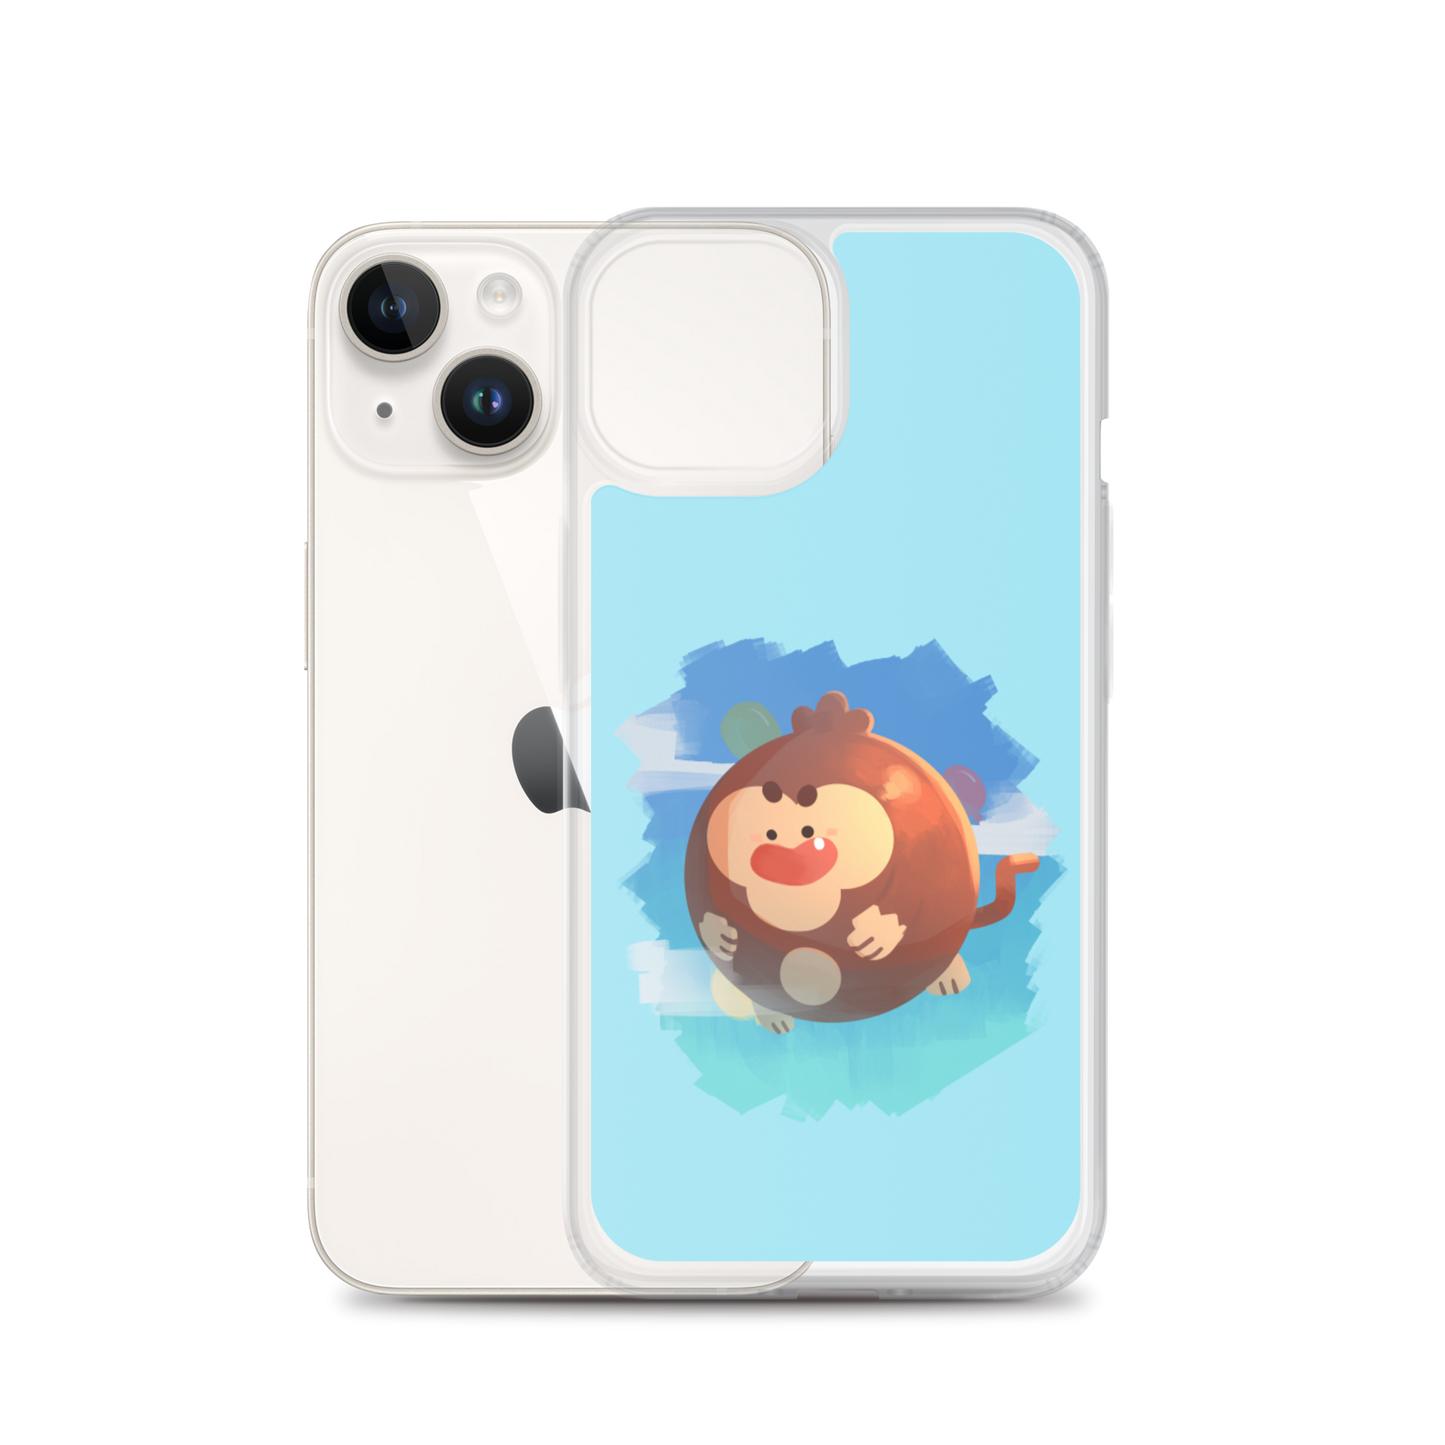 Round Monkey iPhone Case